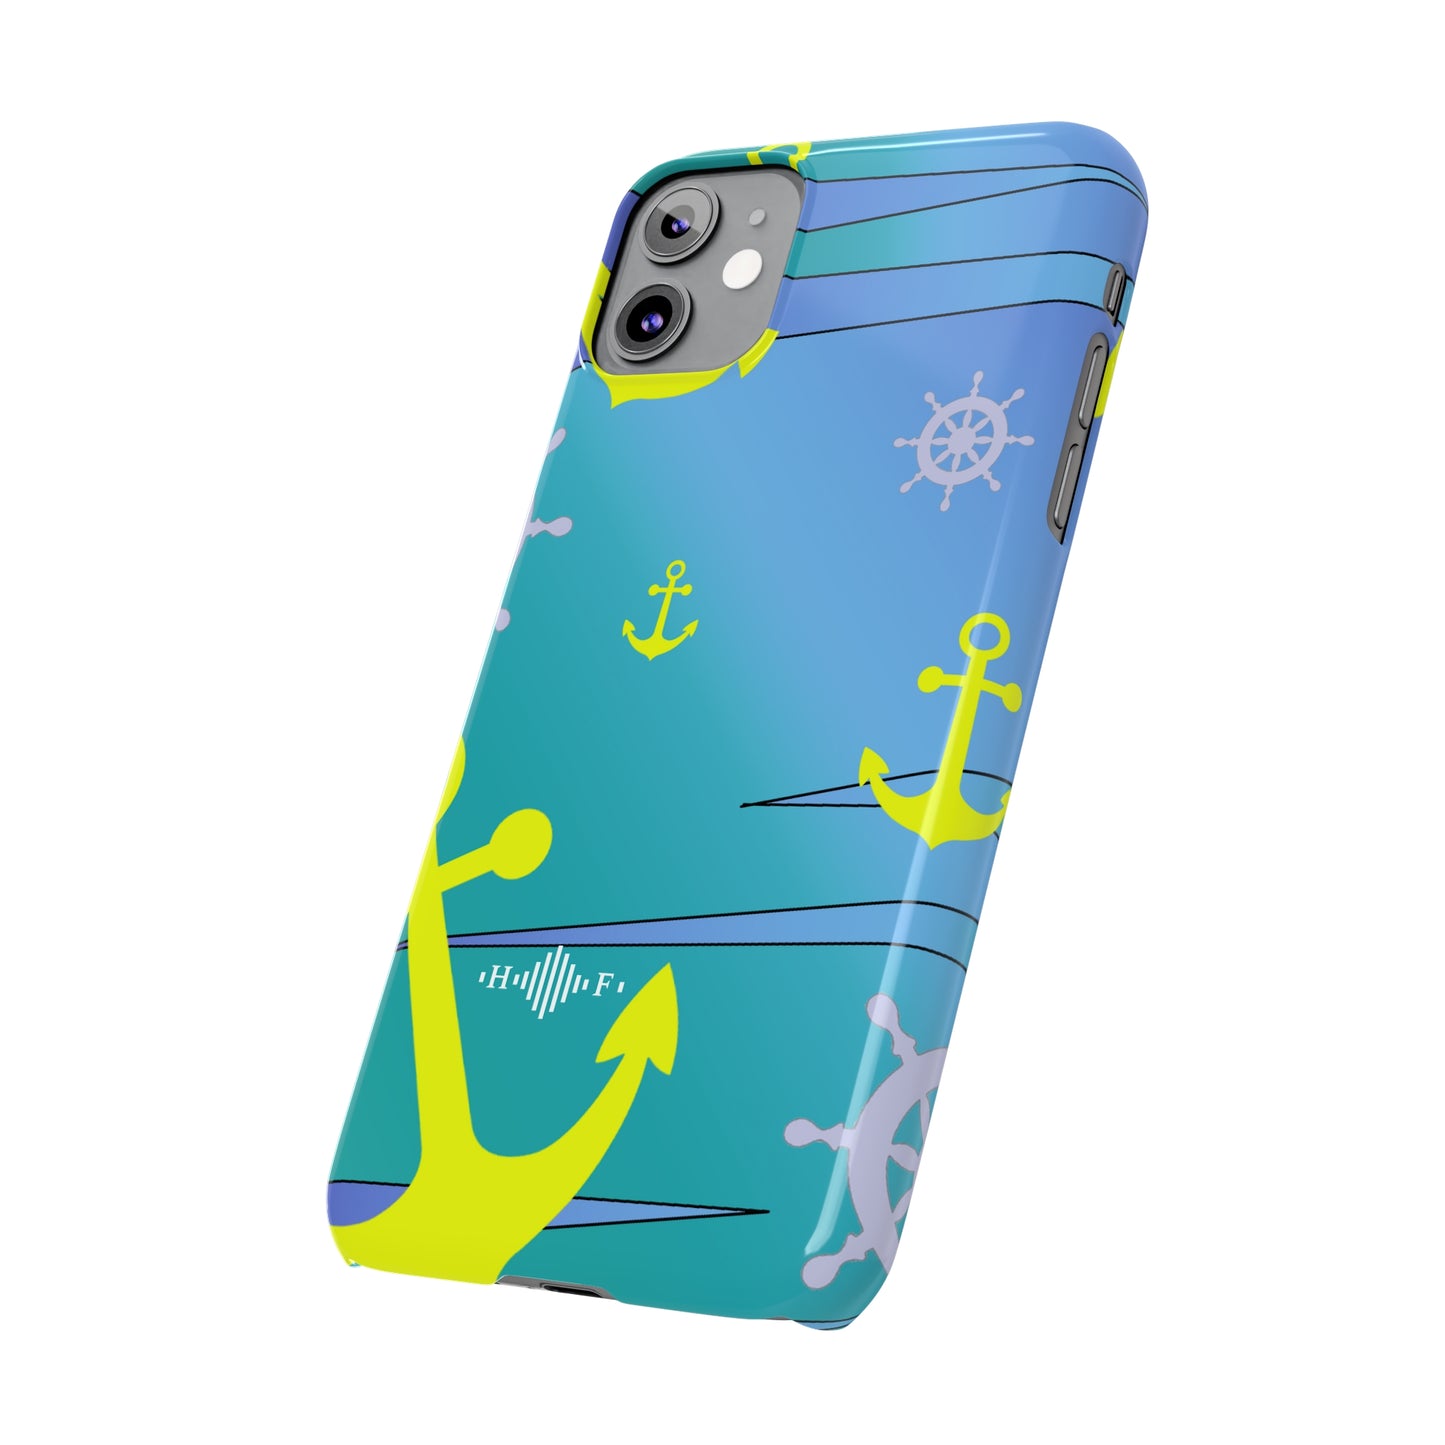 Anchors Ahoy - Slim Phone Cases